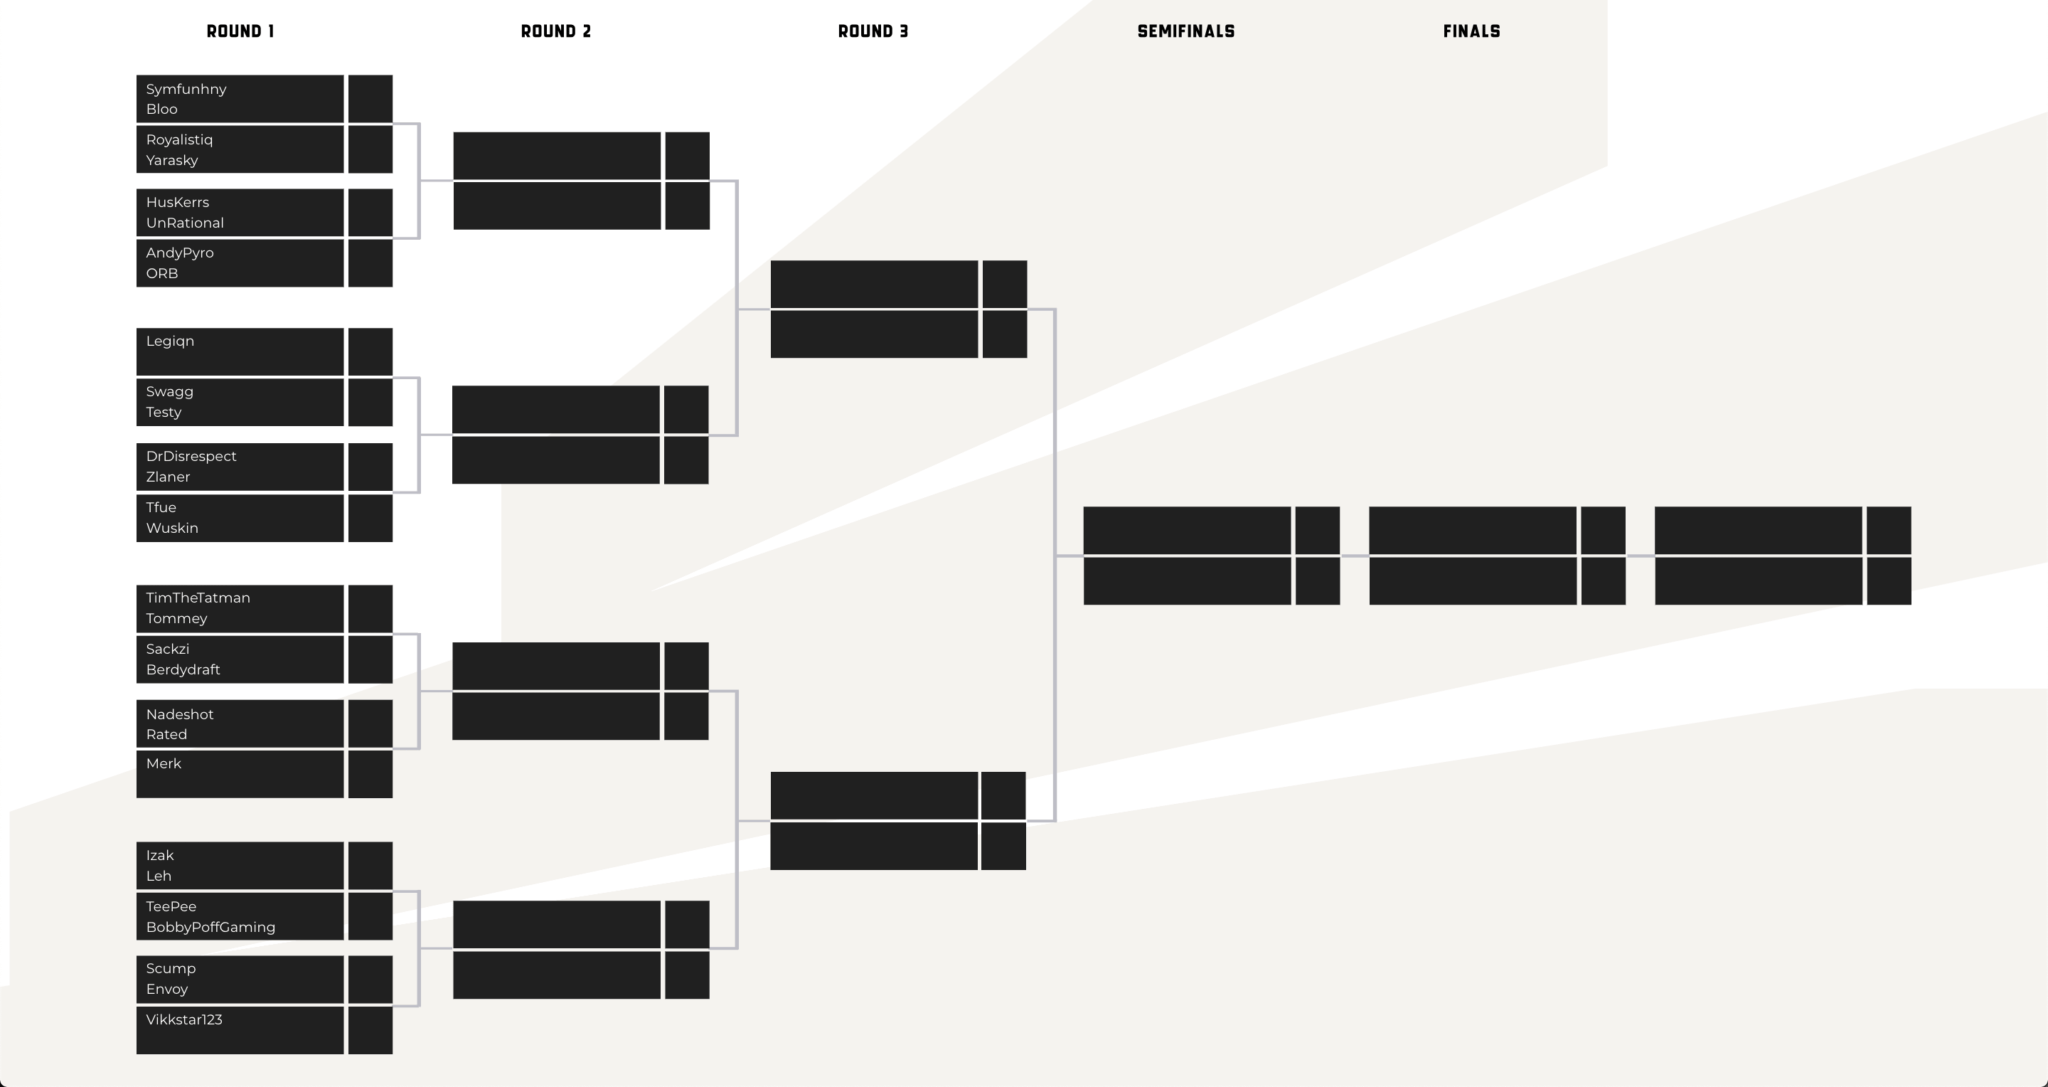 The bracket for Week 4 of Vikkstar's Warzone Showdown tournament.